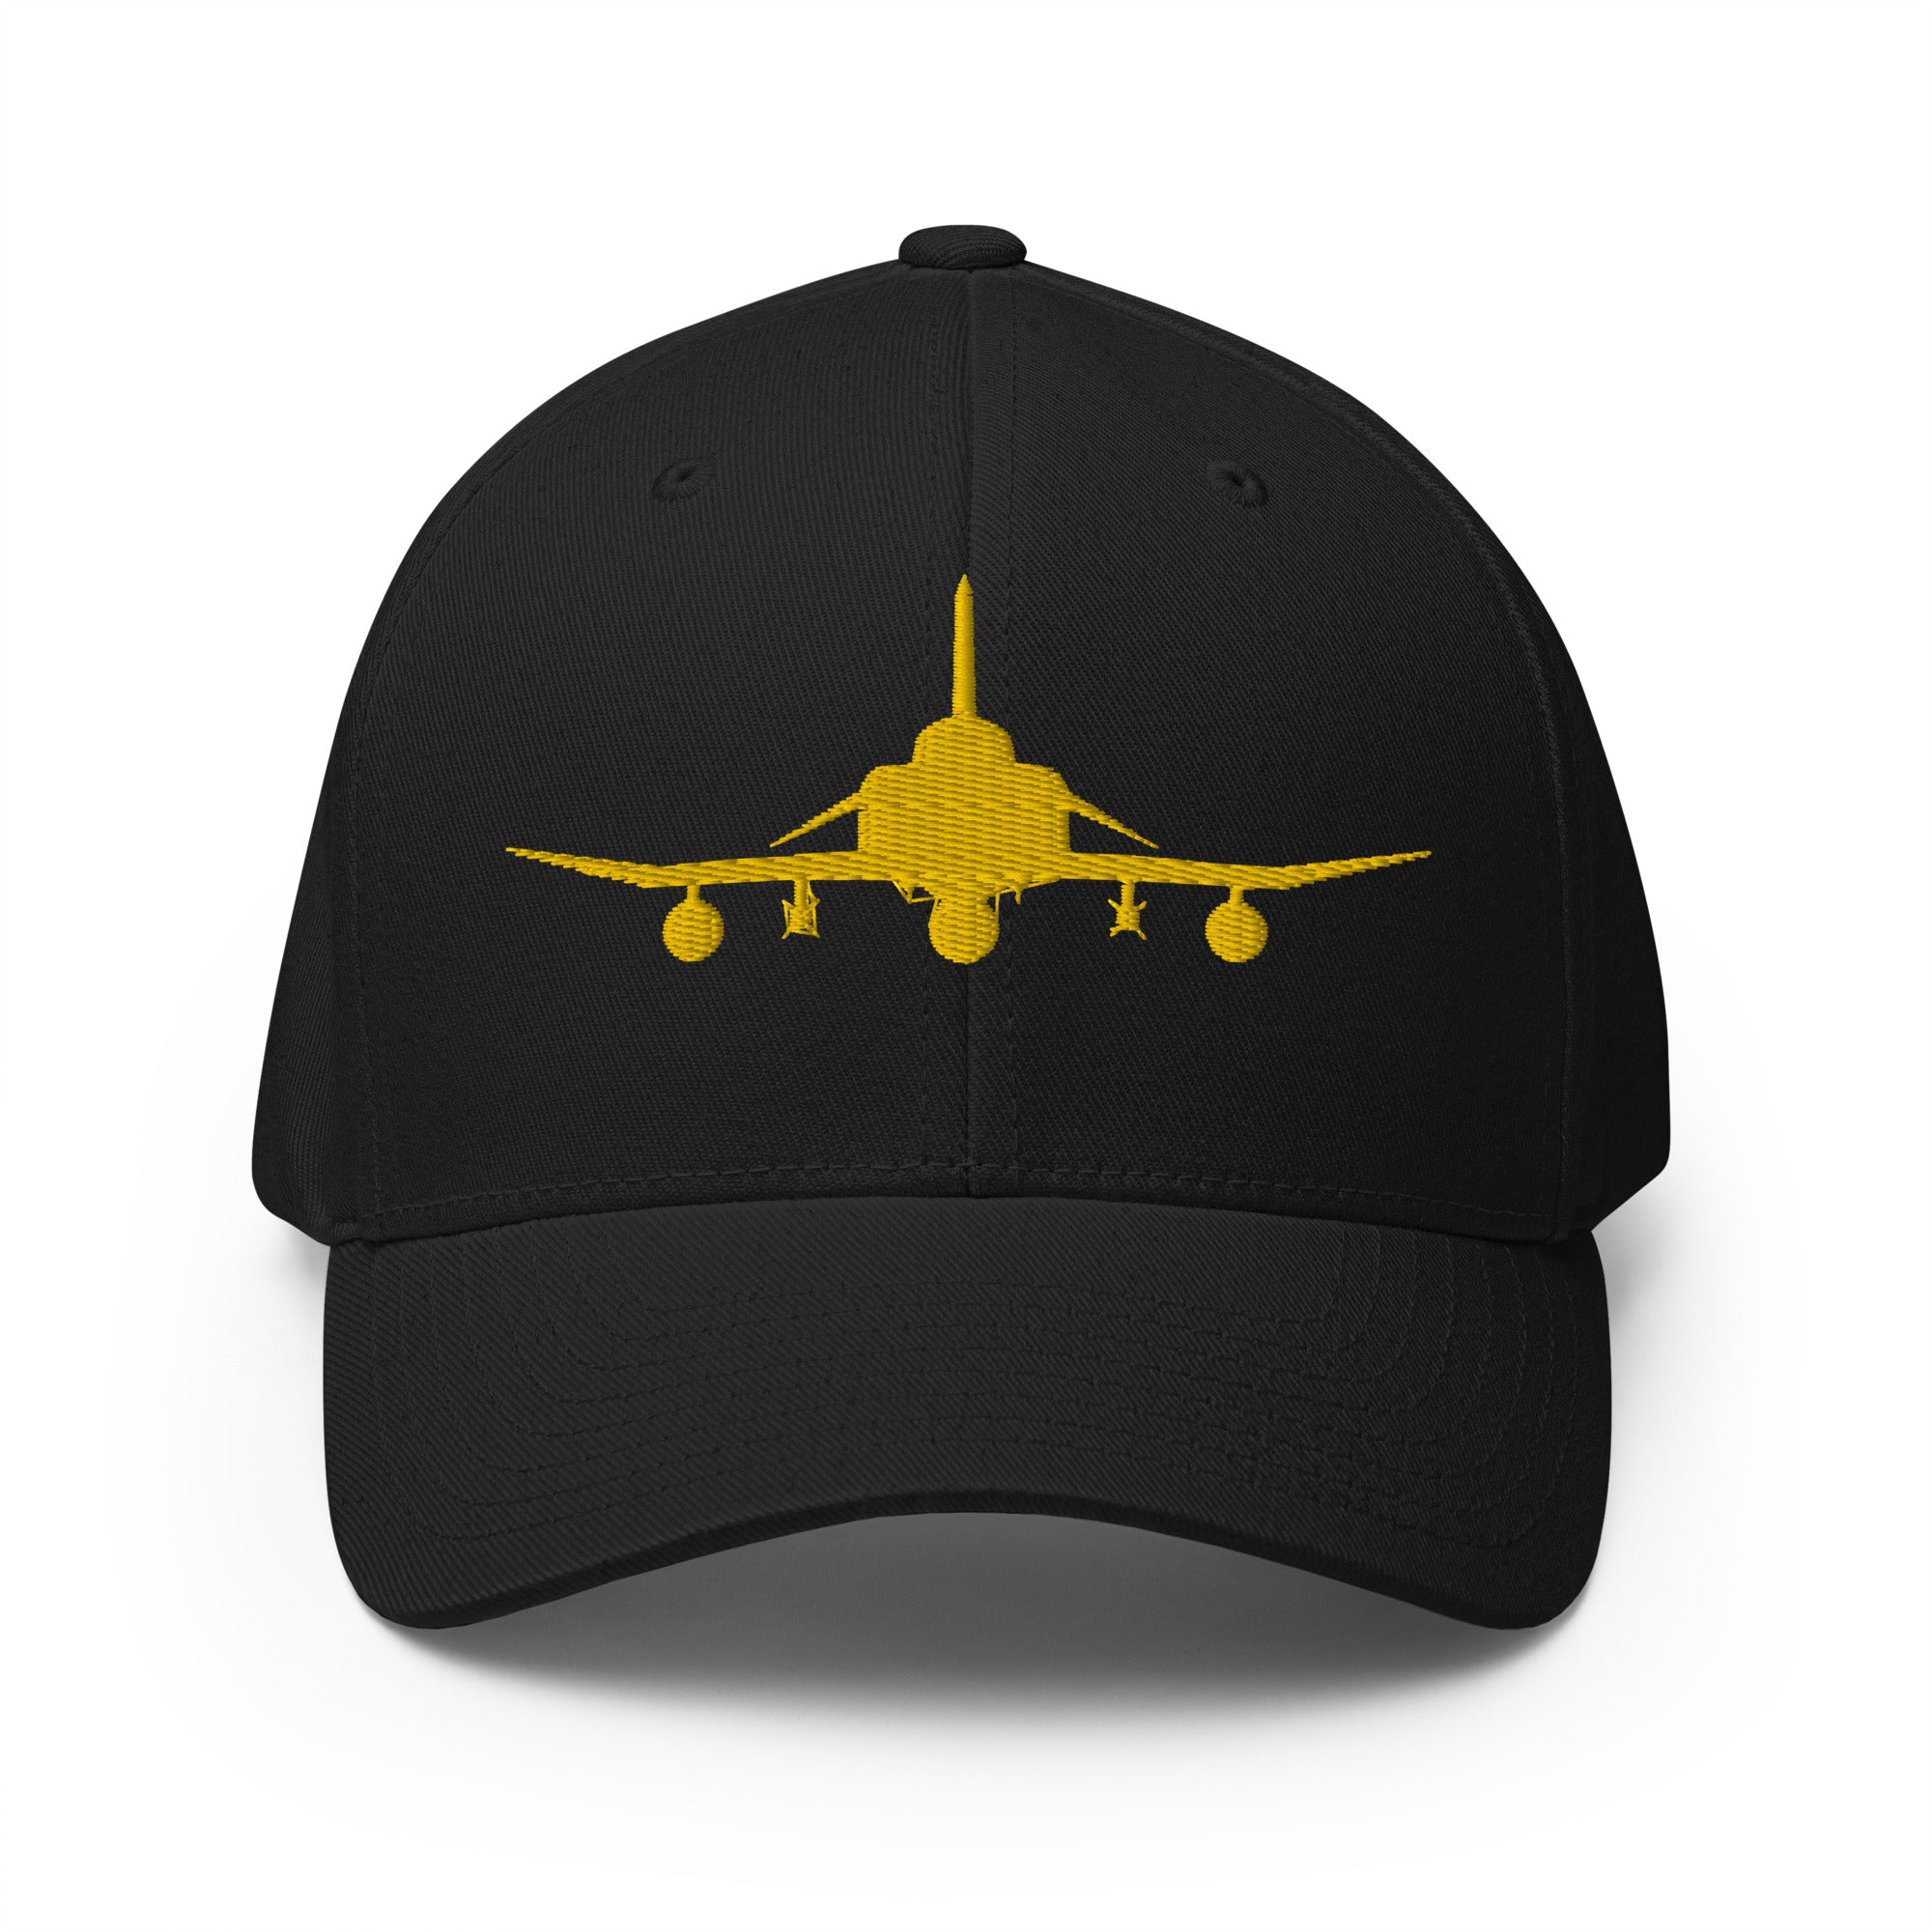 F-4 Phantom (Yellow) Structured Twill Cap - I Love a Hangar